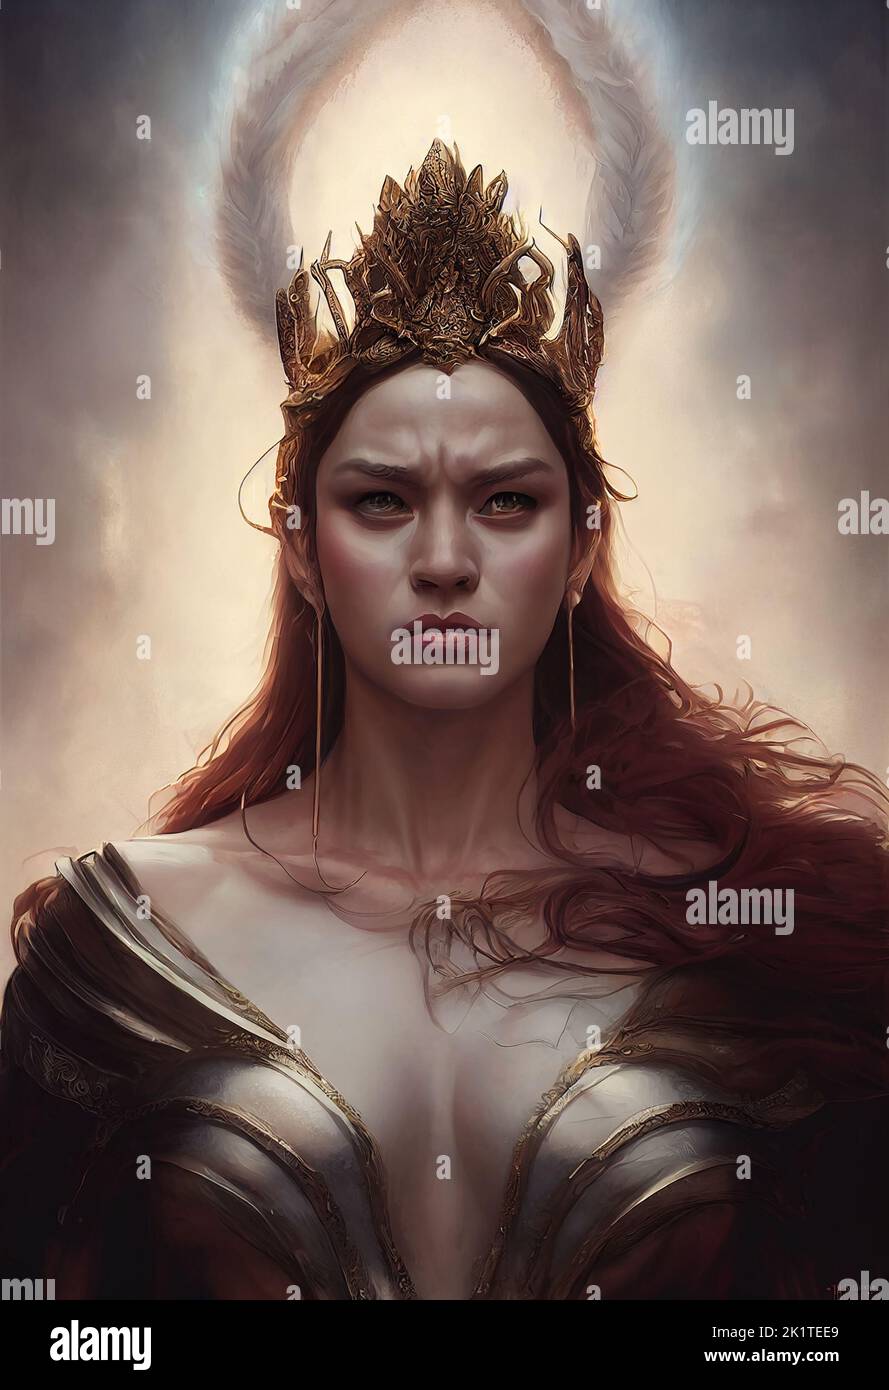 A 3D illustration of a vengeful fantasy war angel with a regal crown - fantasy heroine digital art Stock Photo